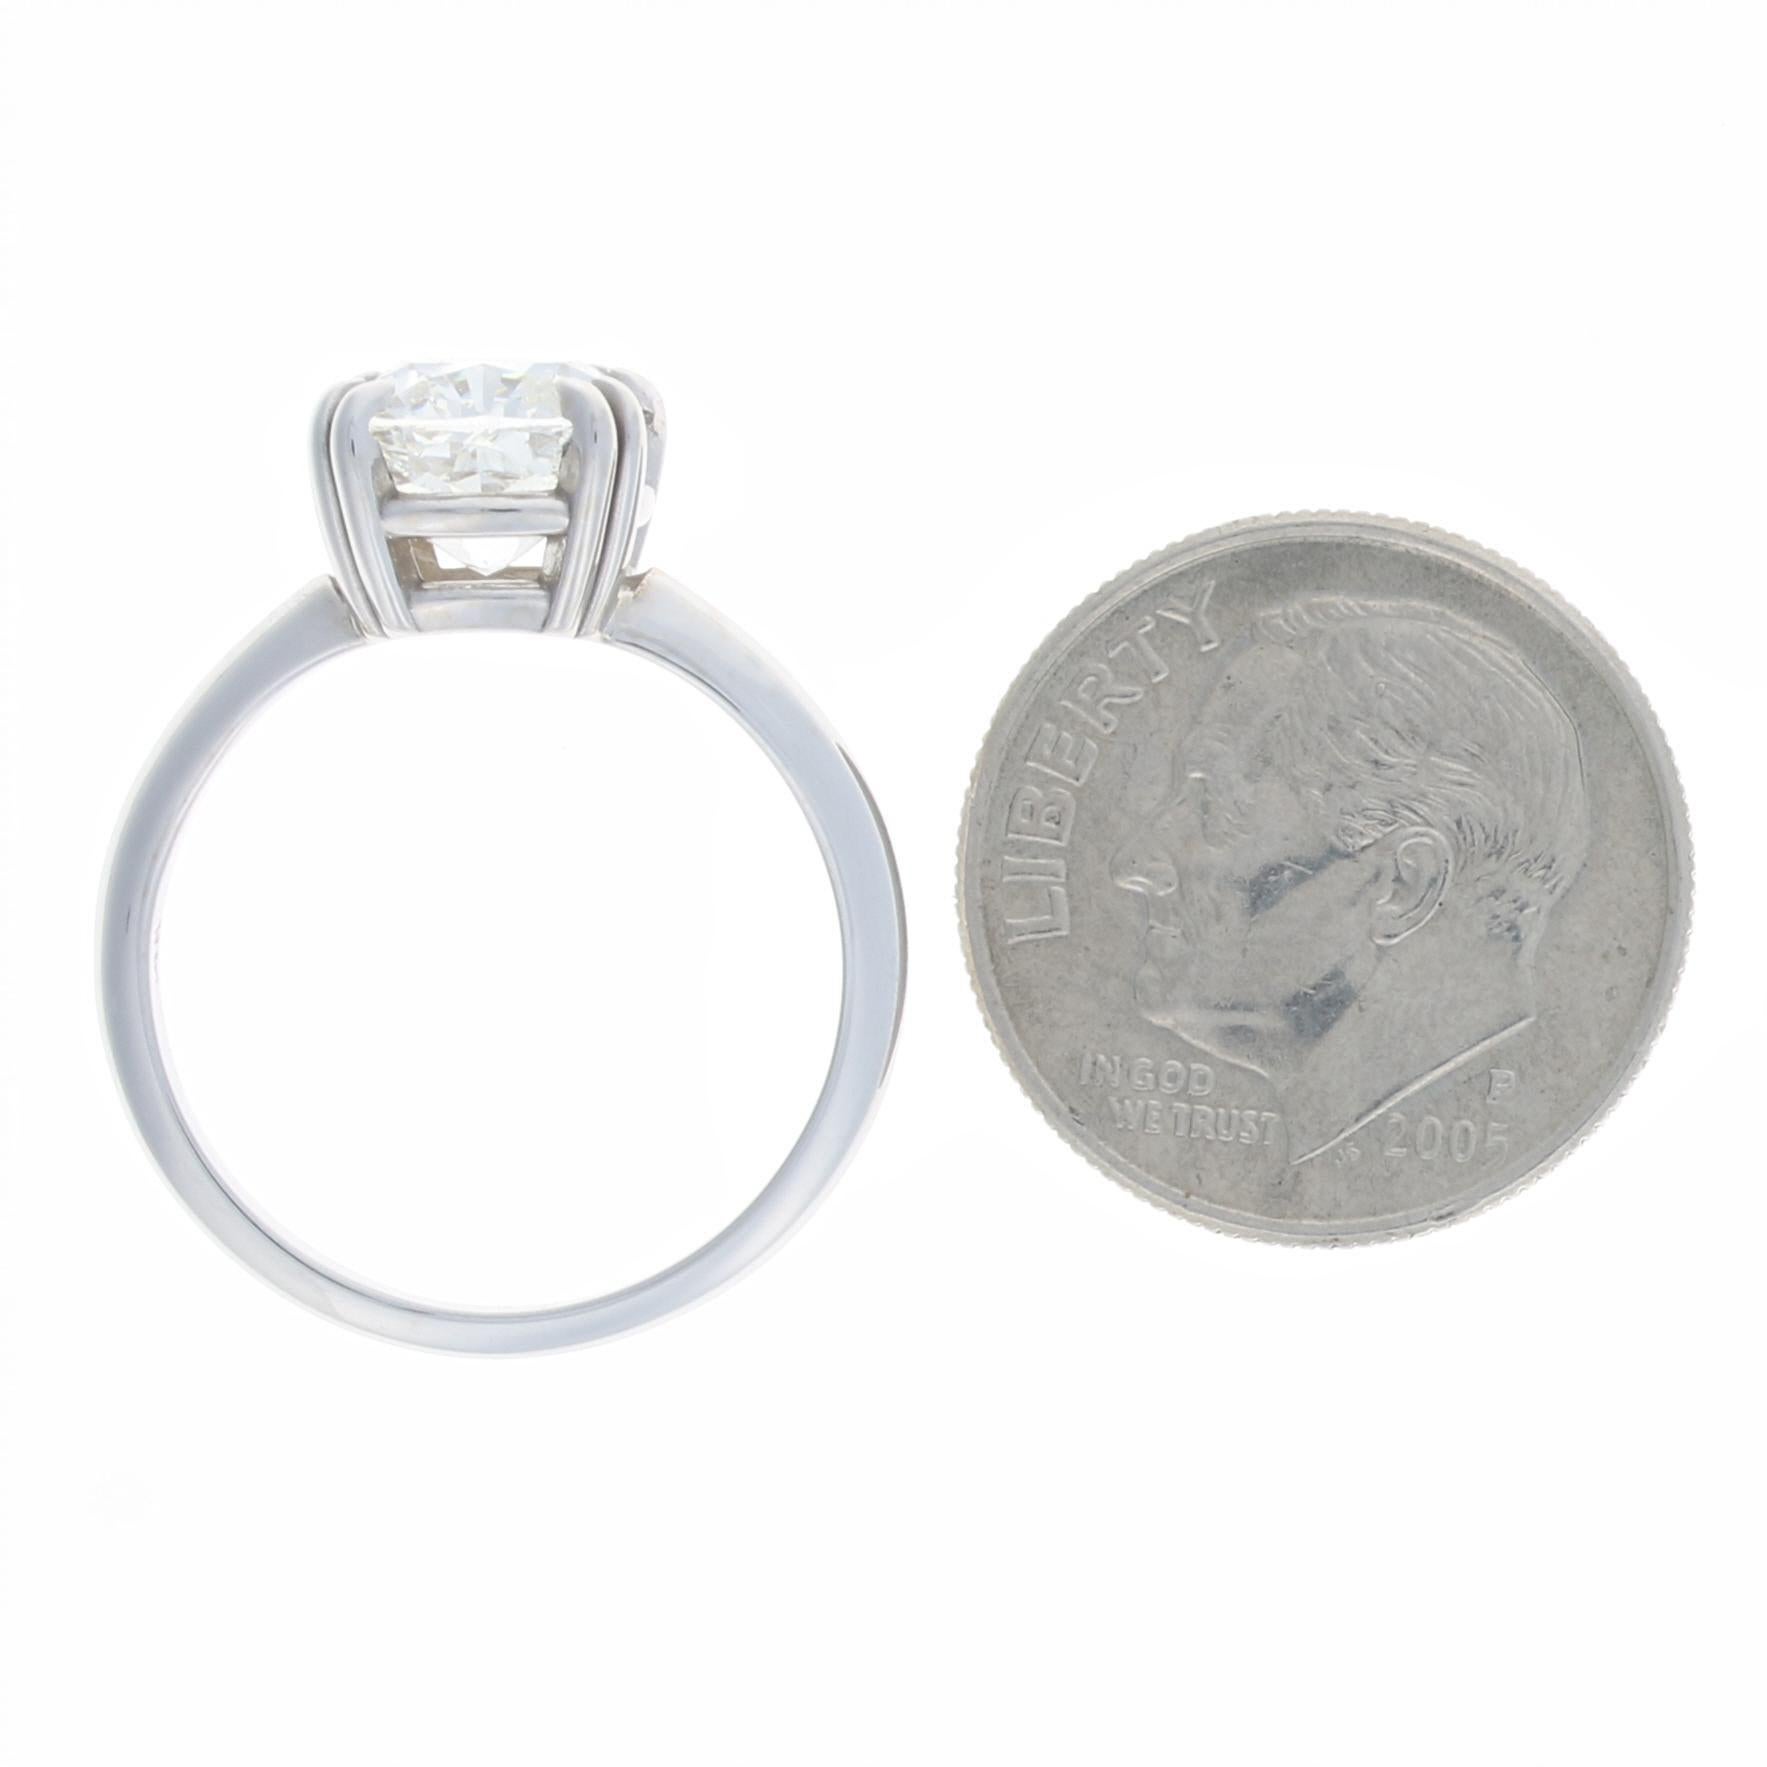 2.52 carat diamond ring